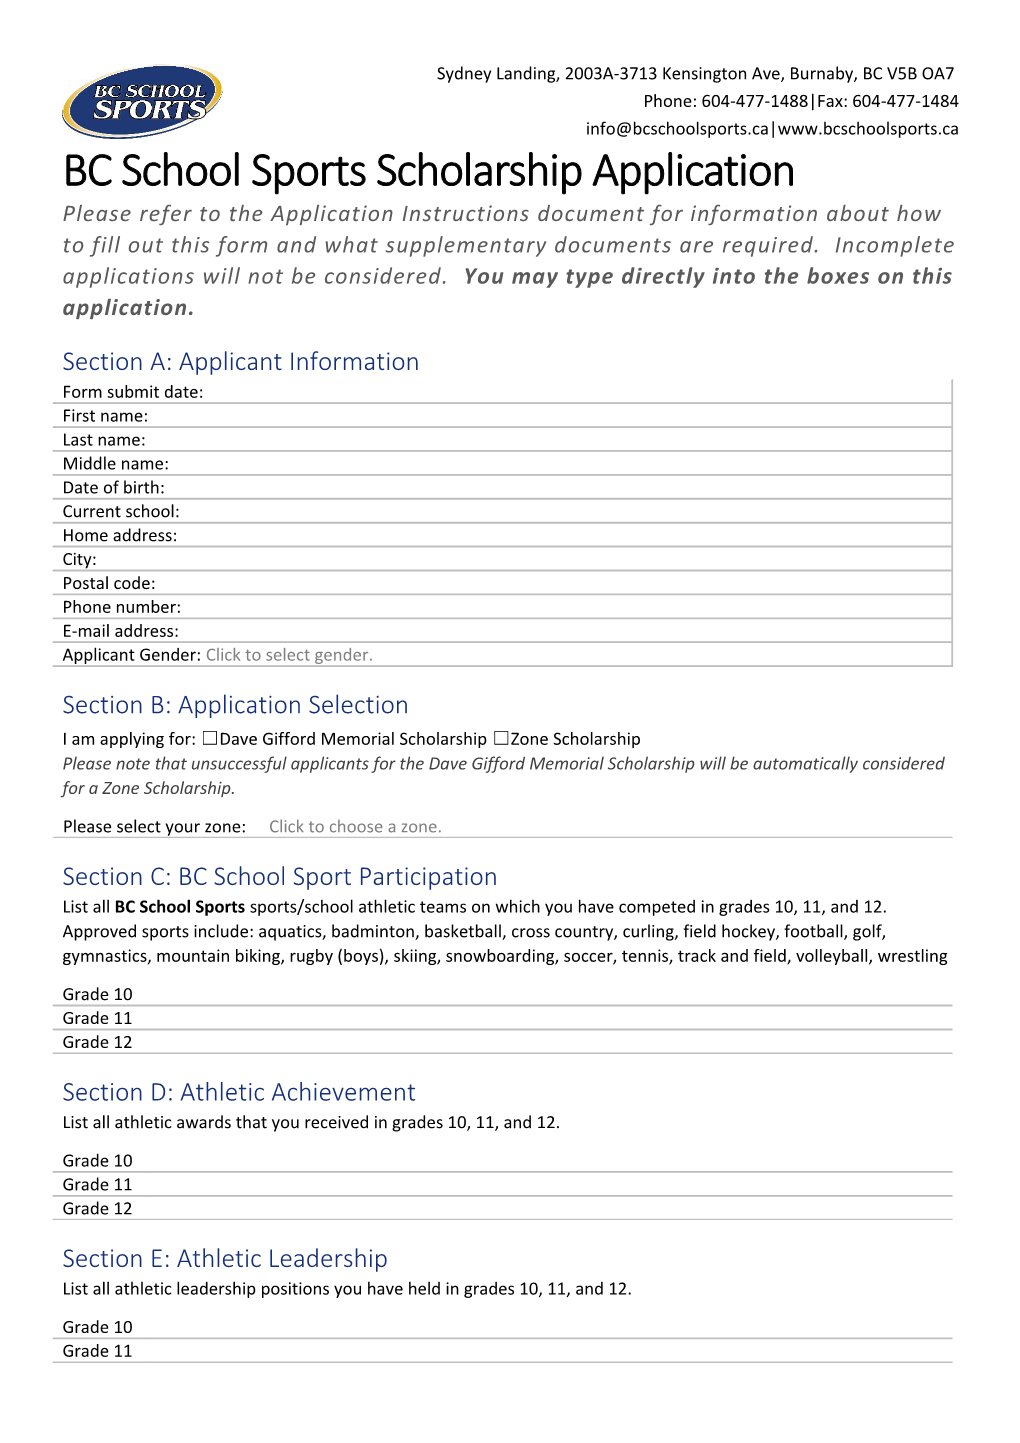 BC School Sports Scholarship Application